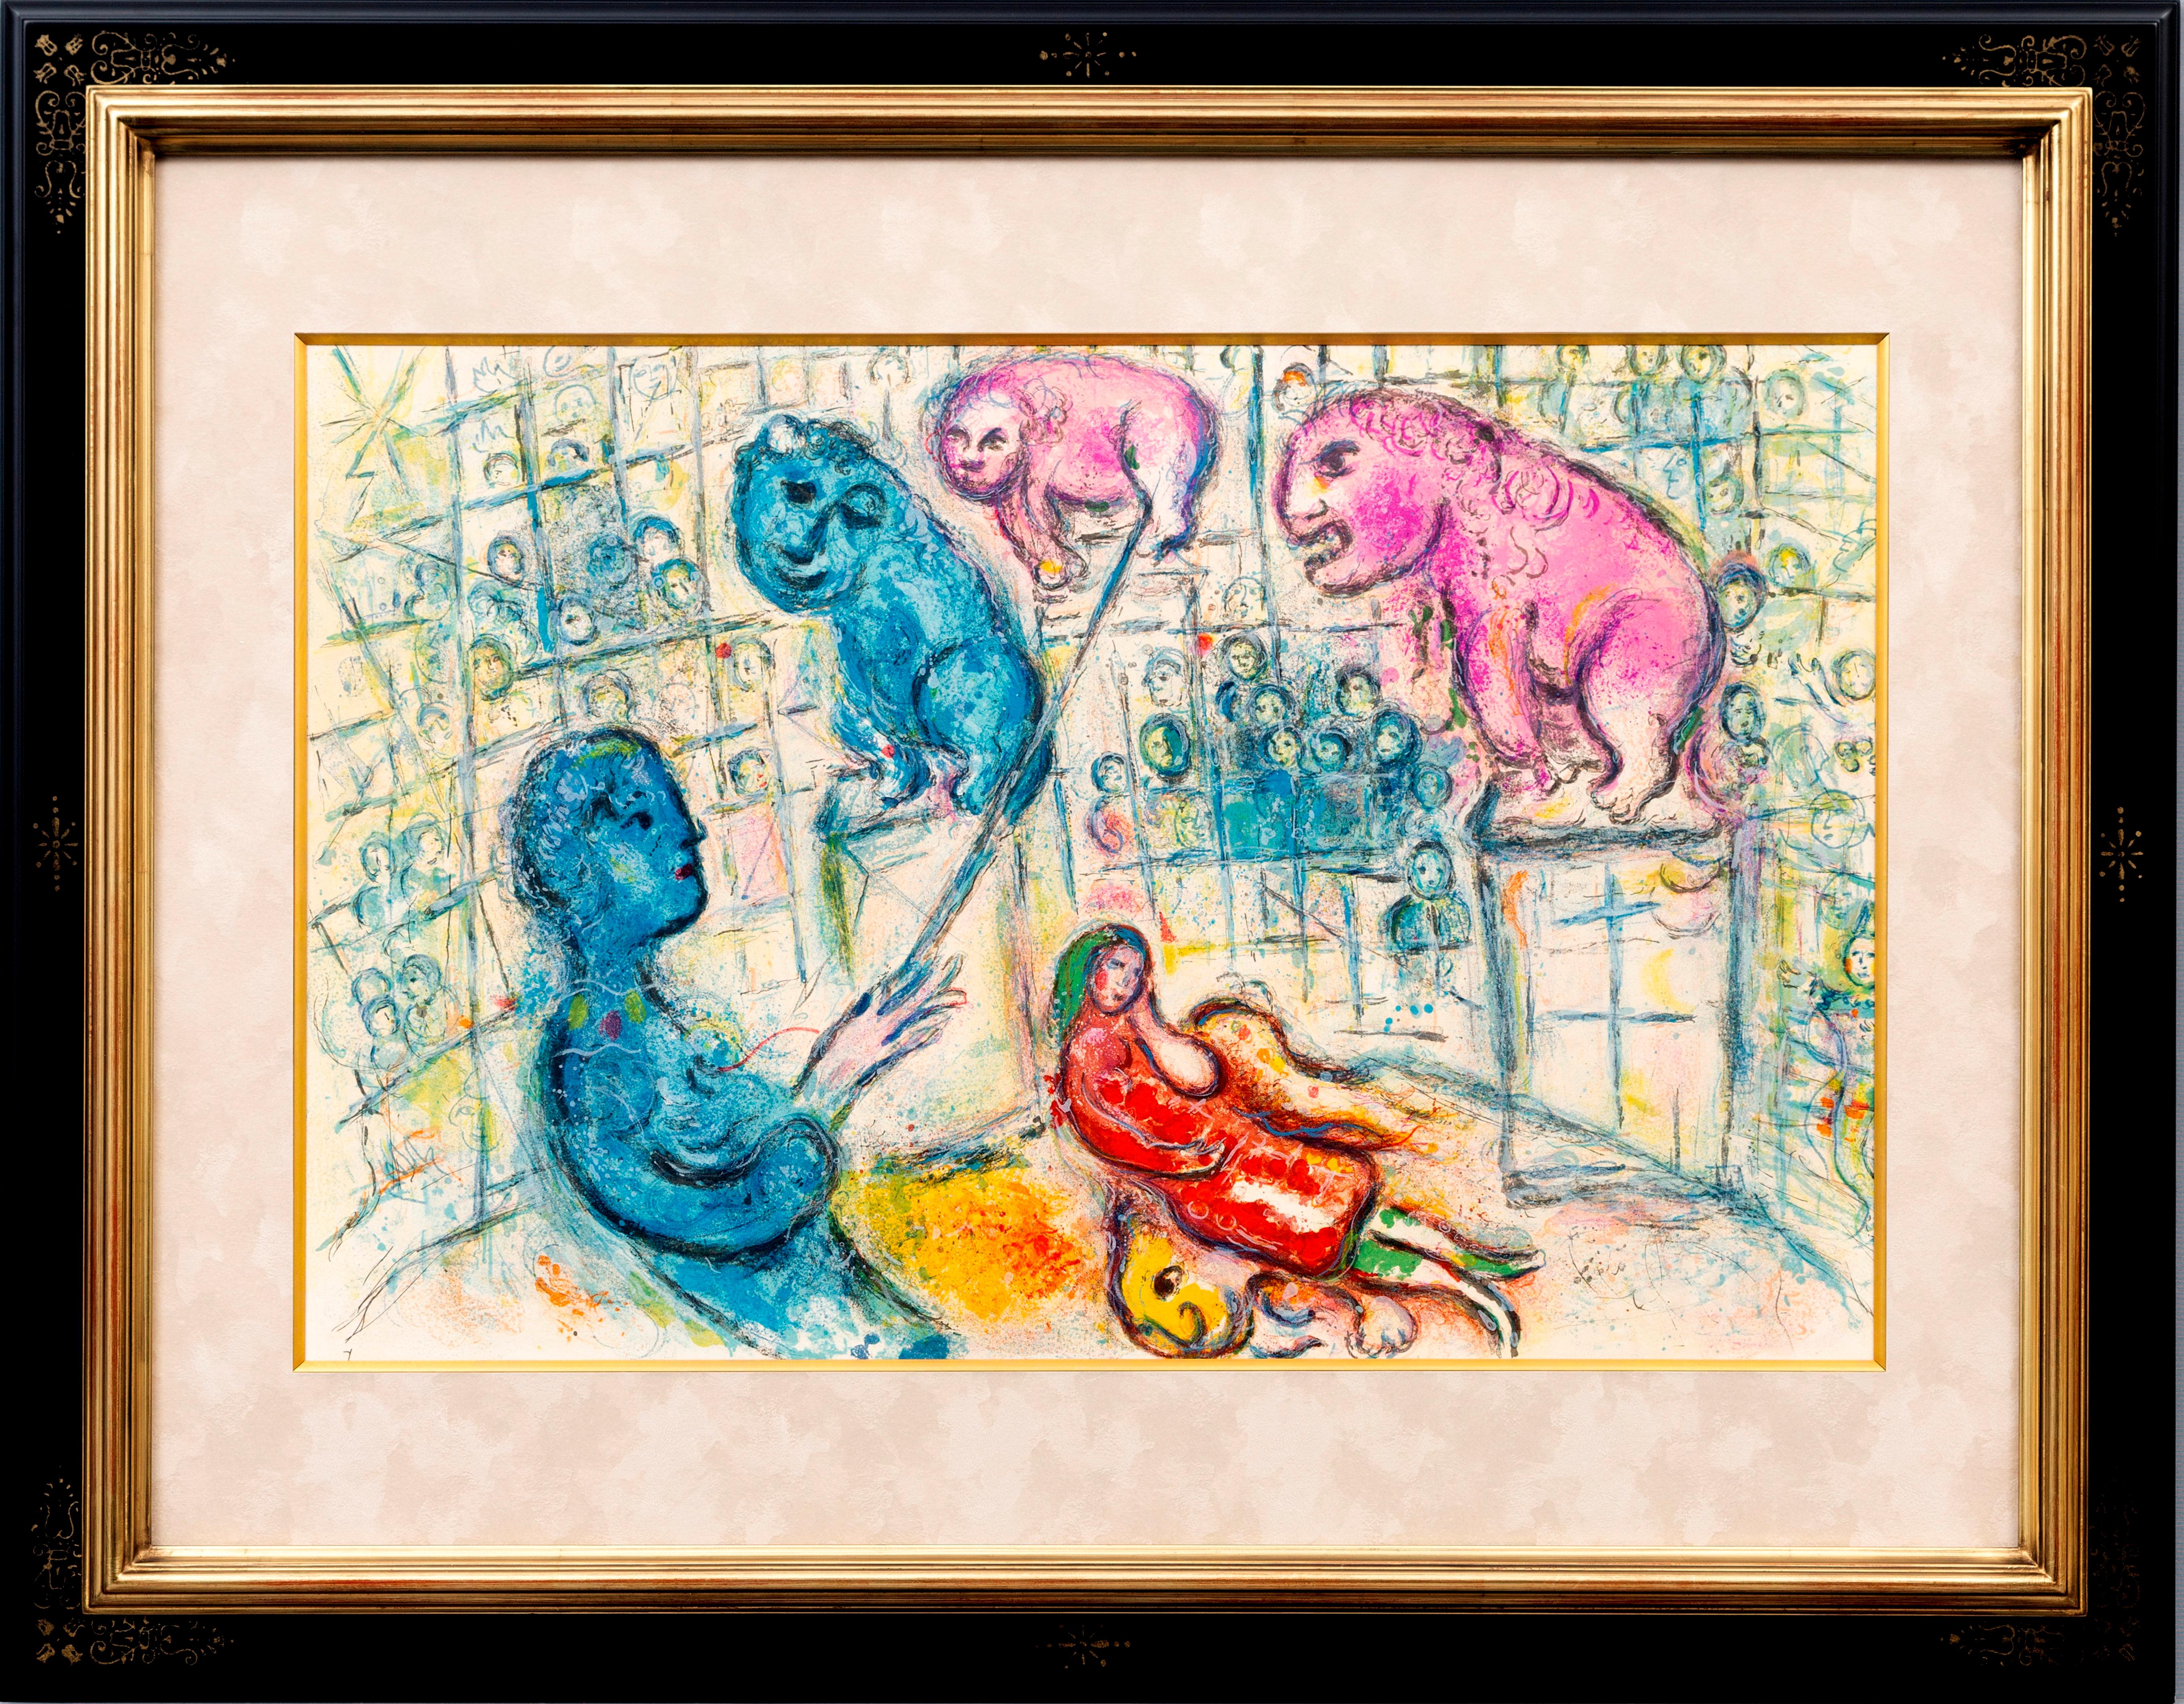 Le cirque pl.17 - Print by Marc Chagall